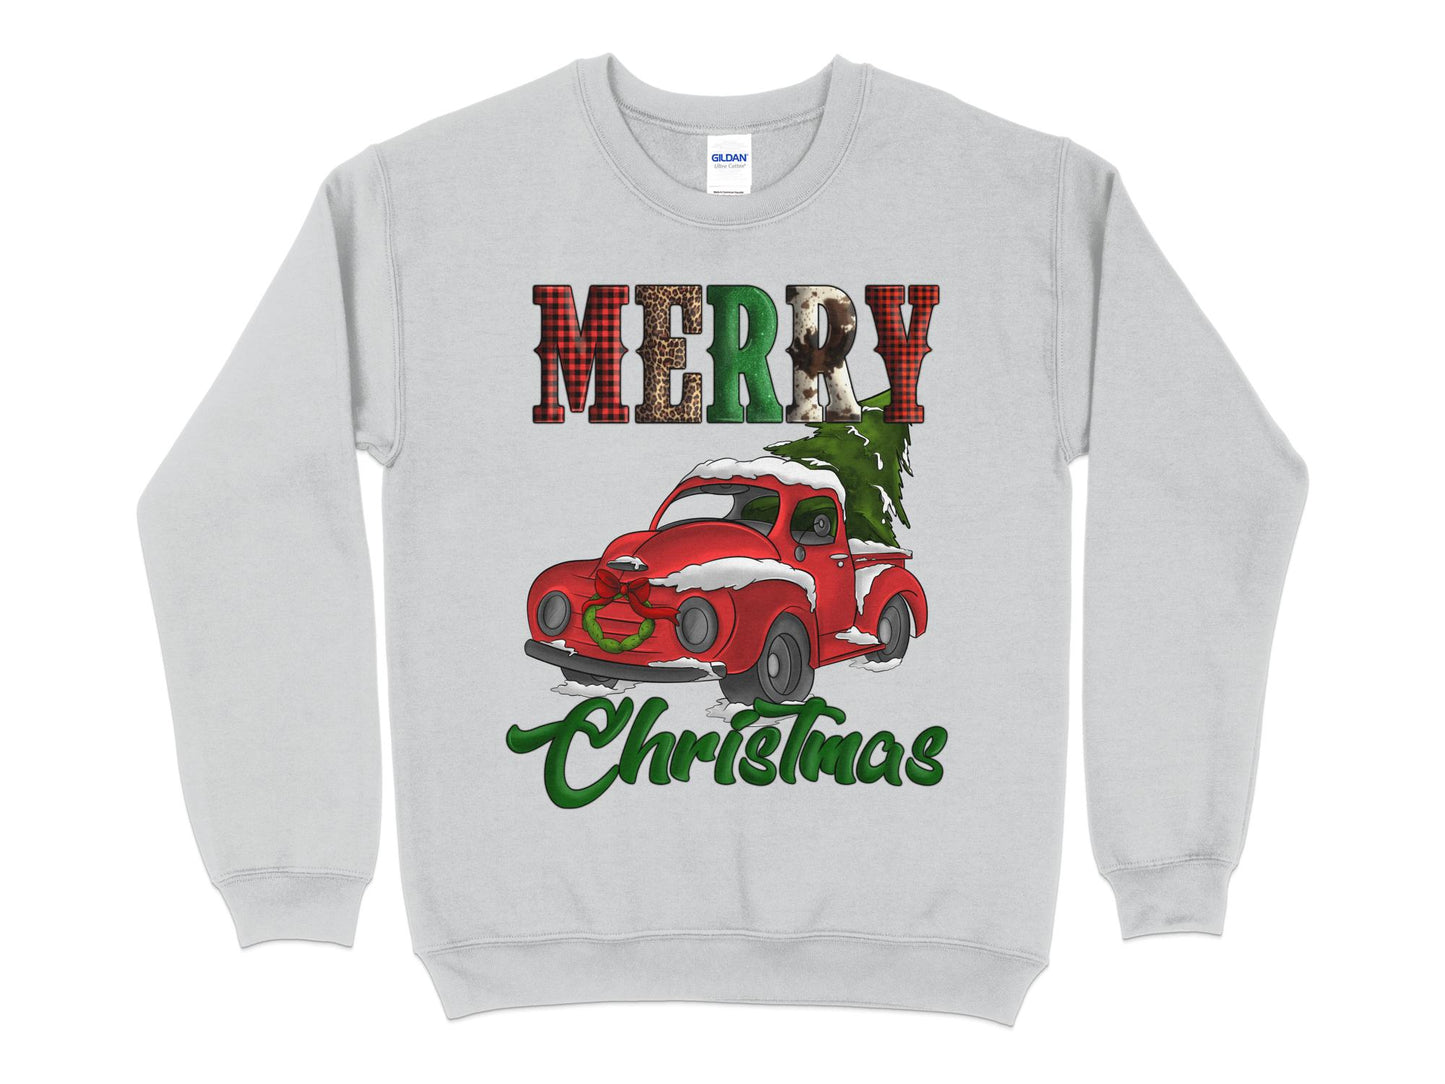 Merry Christmas Red Truck Cow Leopard Buffalo Print Sweatshirt, Christmas Sweater - Mardonyx Sweatshirt S / Sport Grey